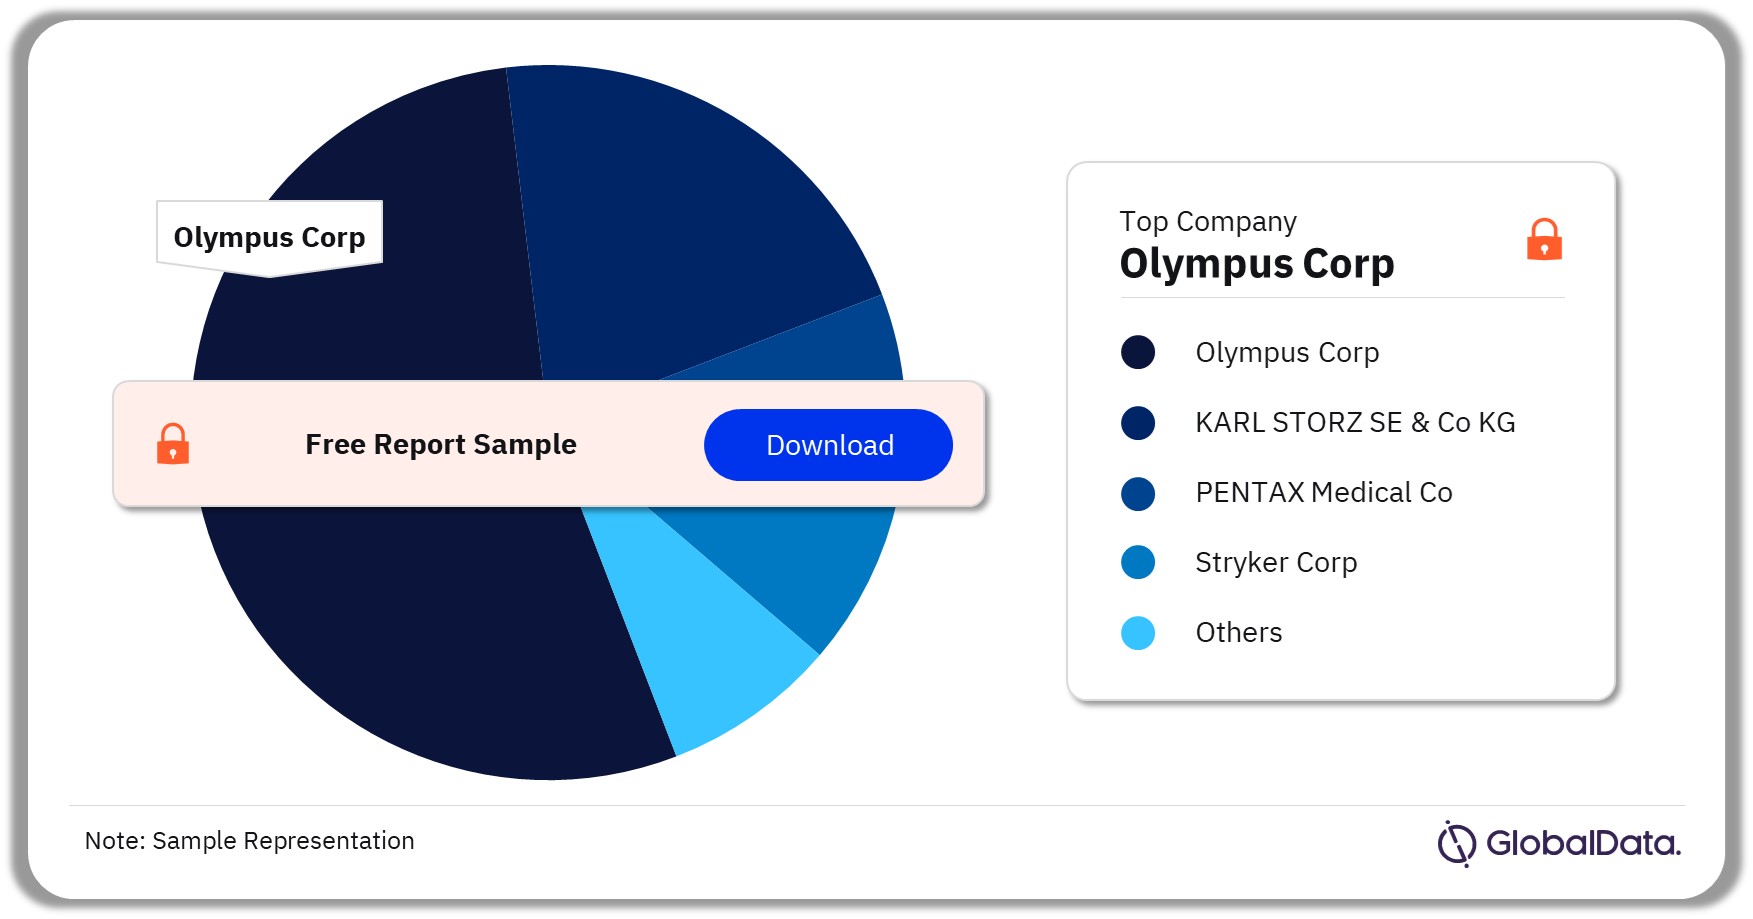 Cystoscopes Market Analysis by Companies, 2023 (%)